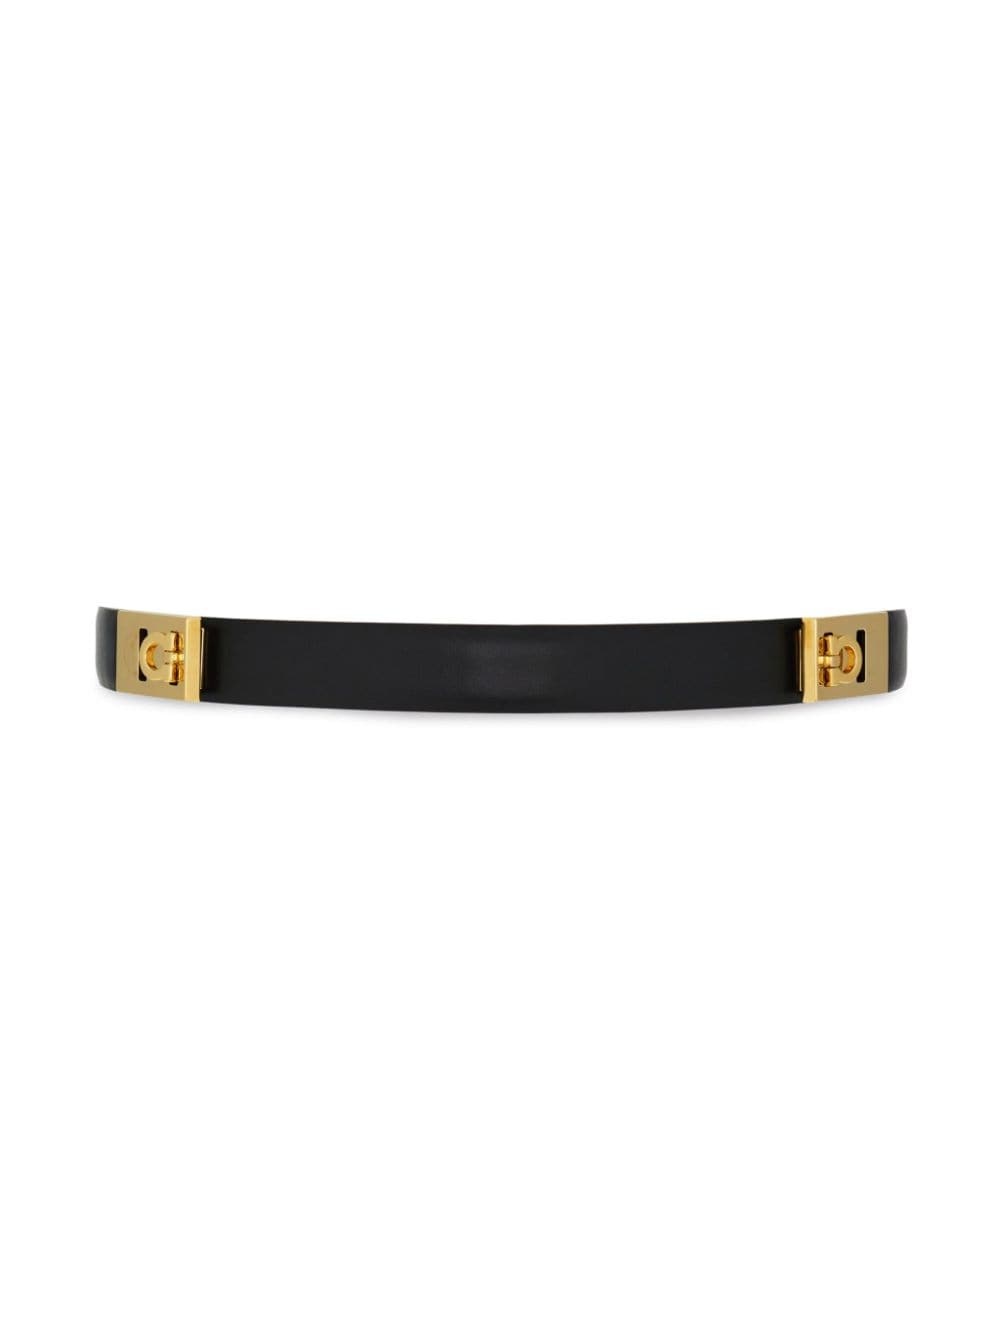 Gancini leather belt - 3